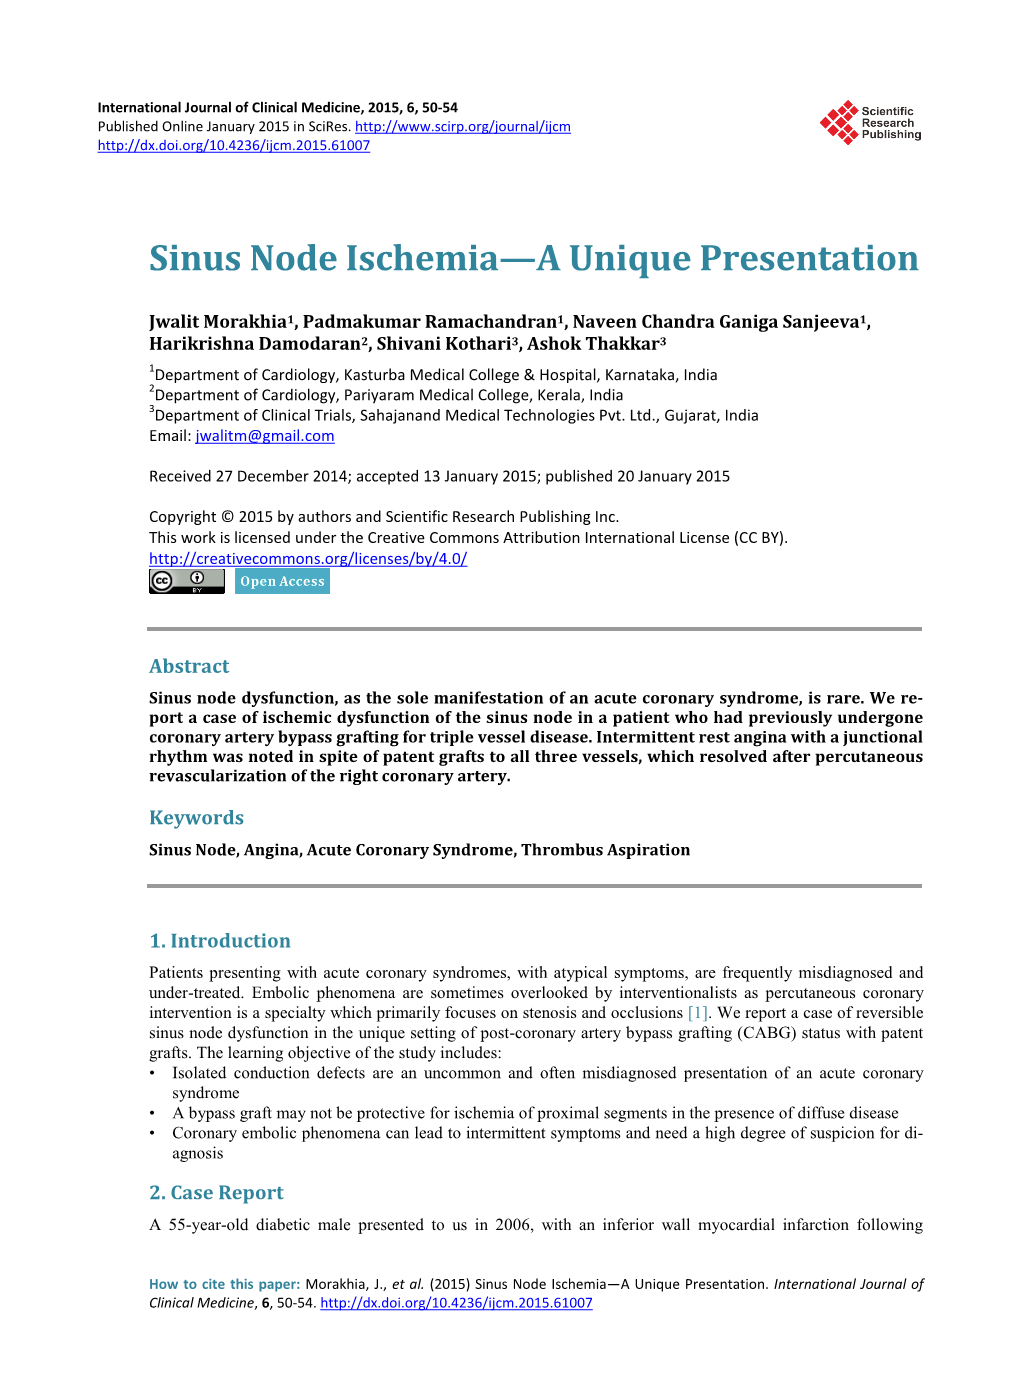 Sinus Node Ischemia—A Unique Presentation